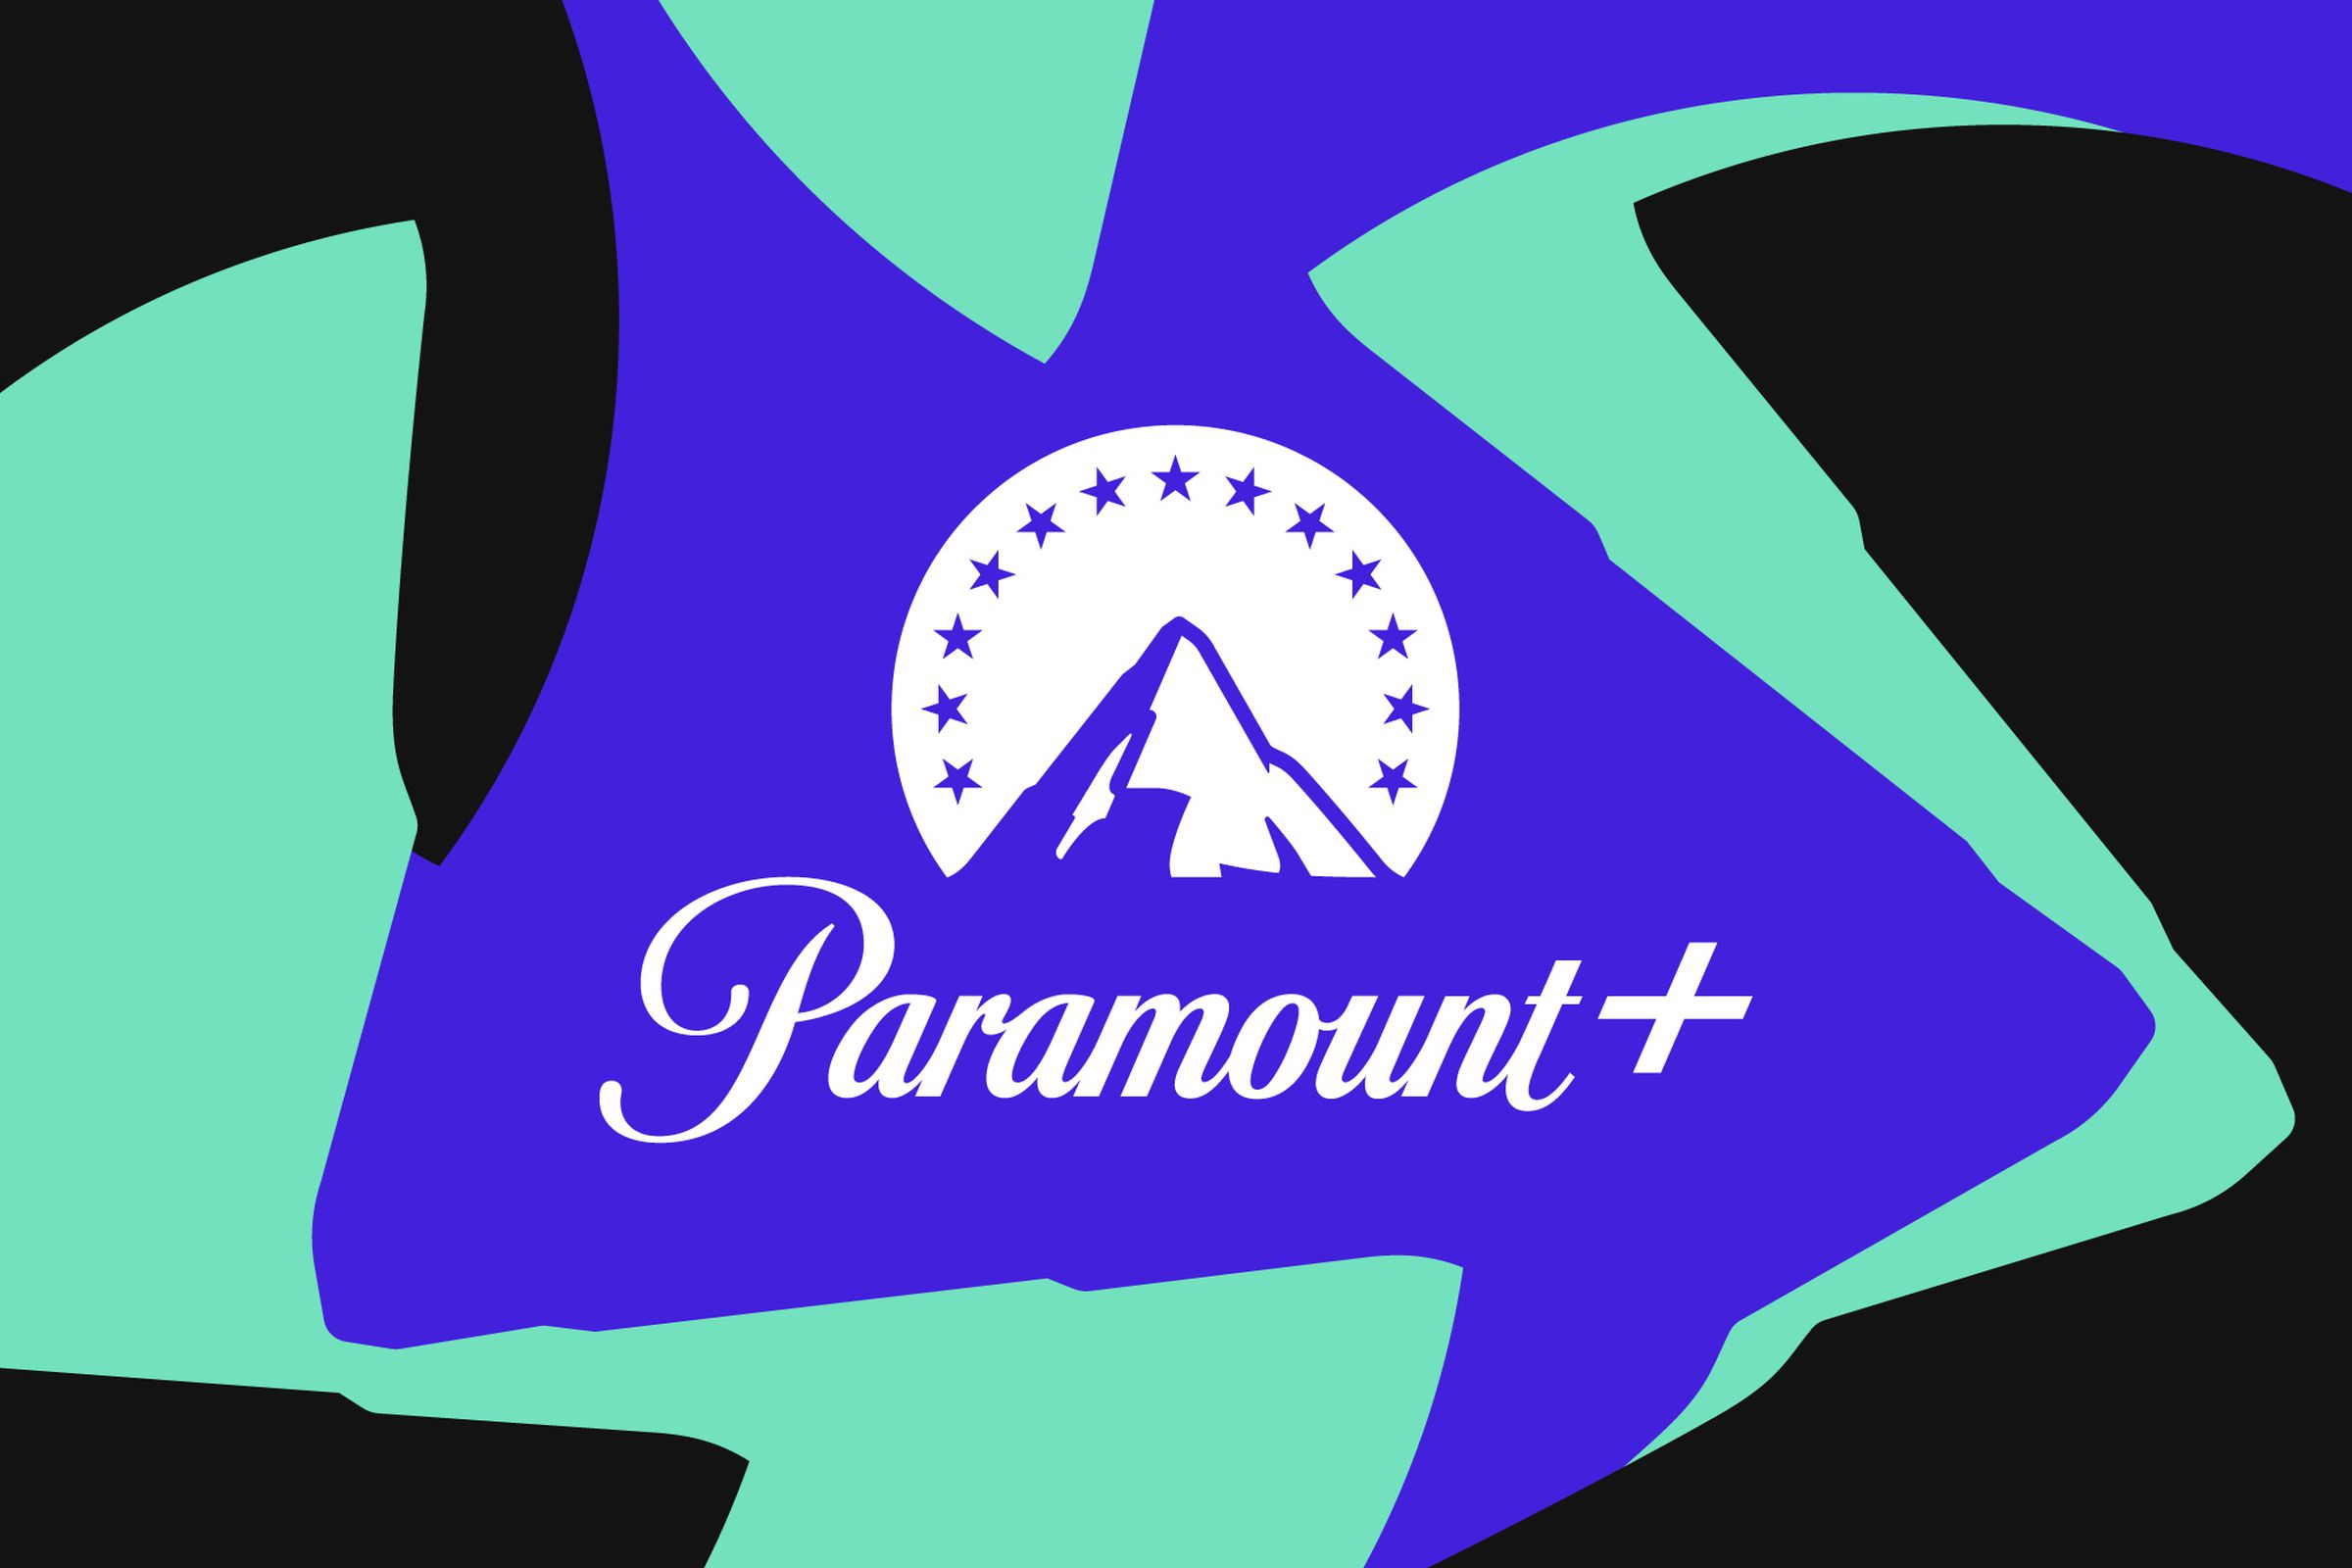 An image showing the Paramount Plus logo